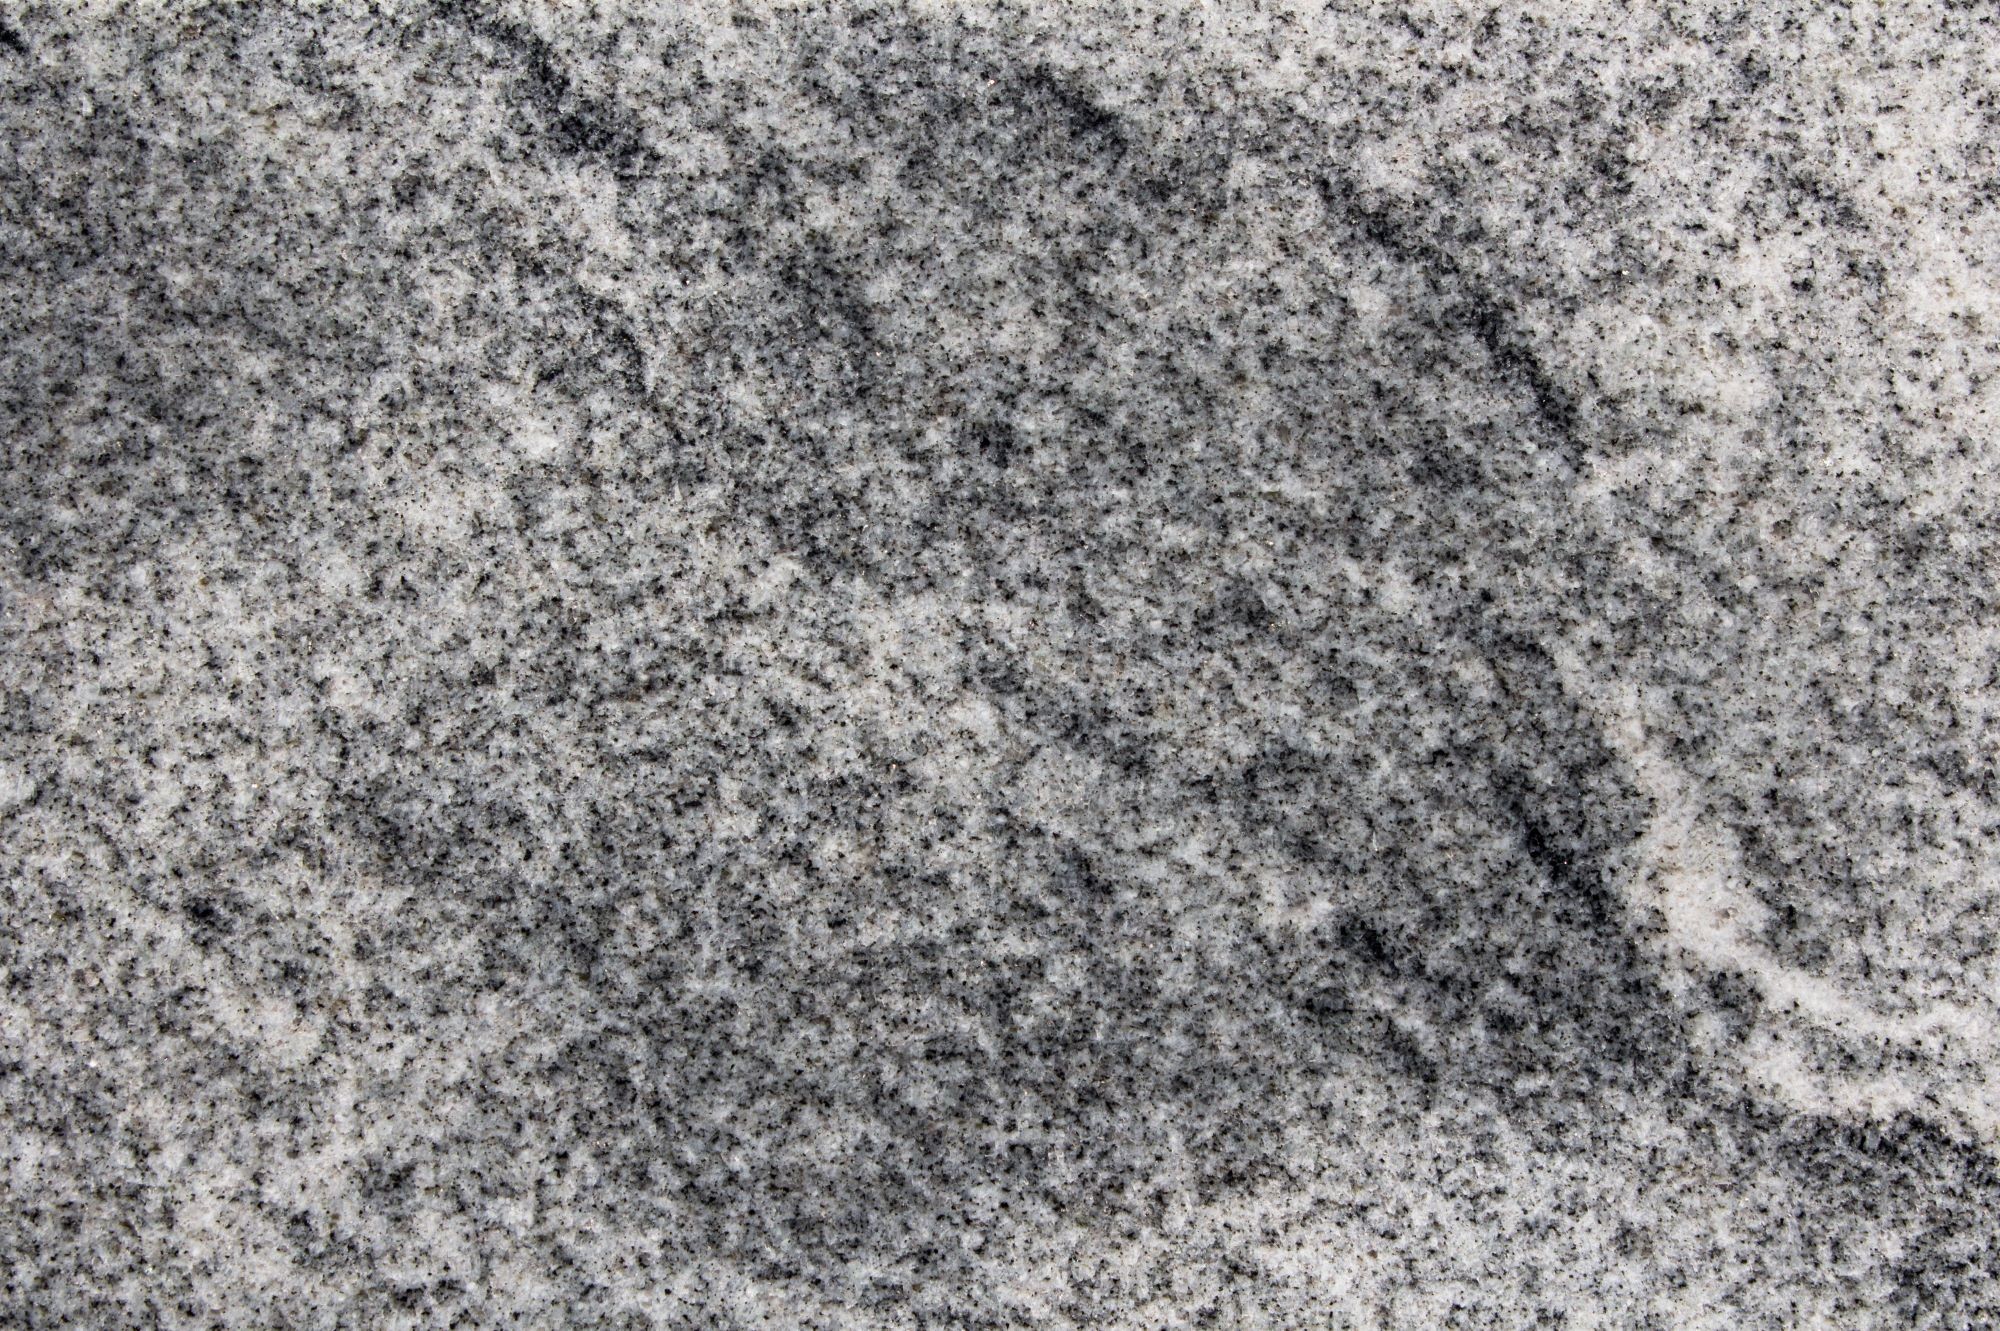 Dlažba kamenná DEKSTONE G 130 Viscont White žula leštěná 610×305 mm 1,116 m2